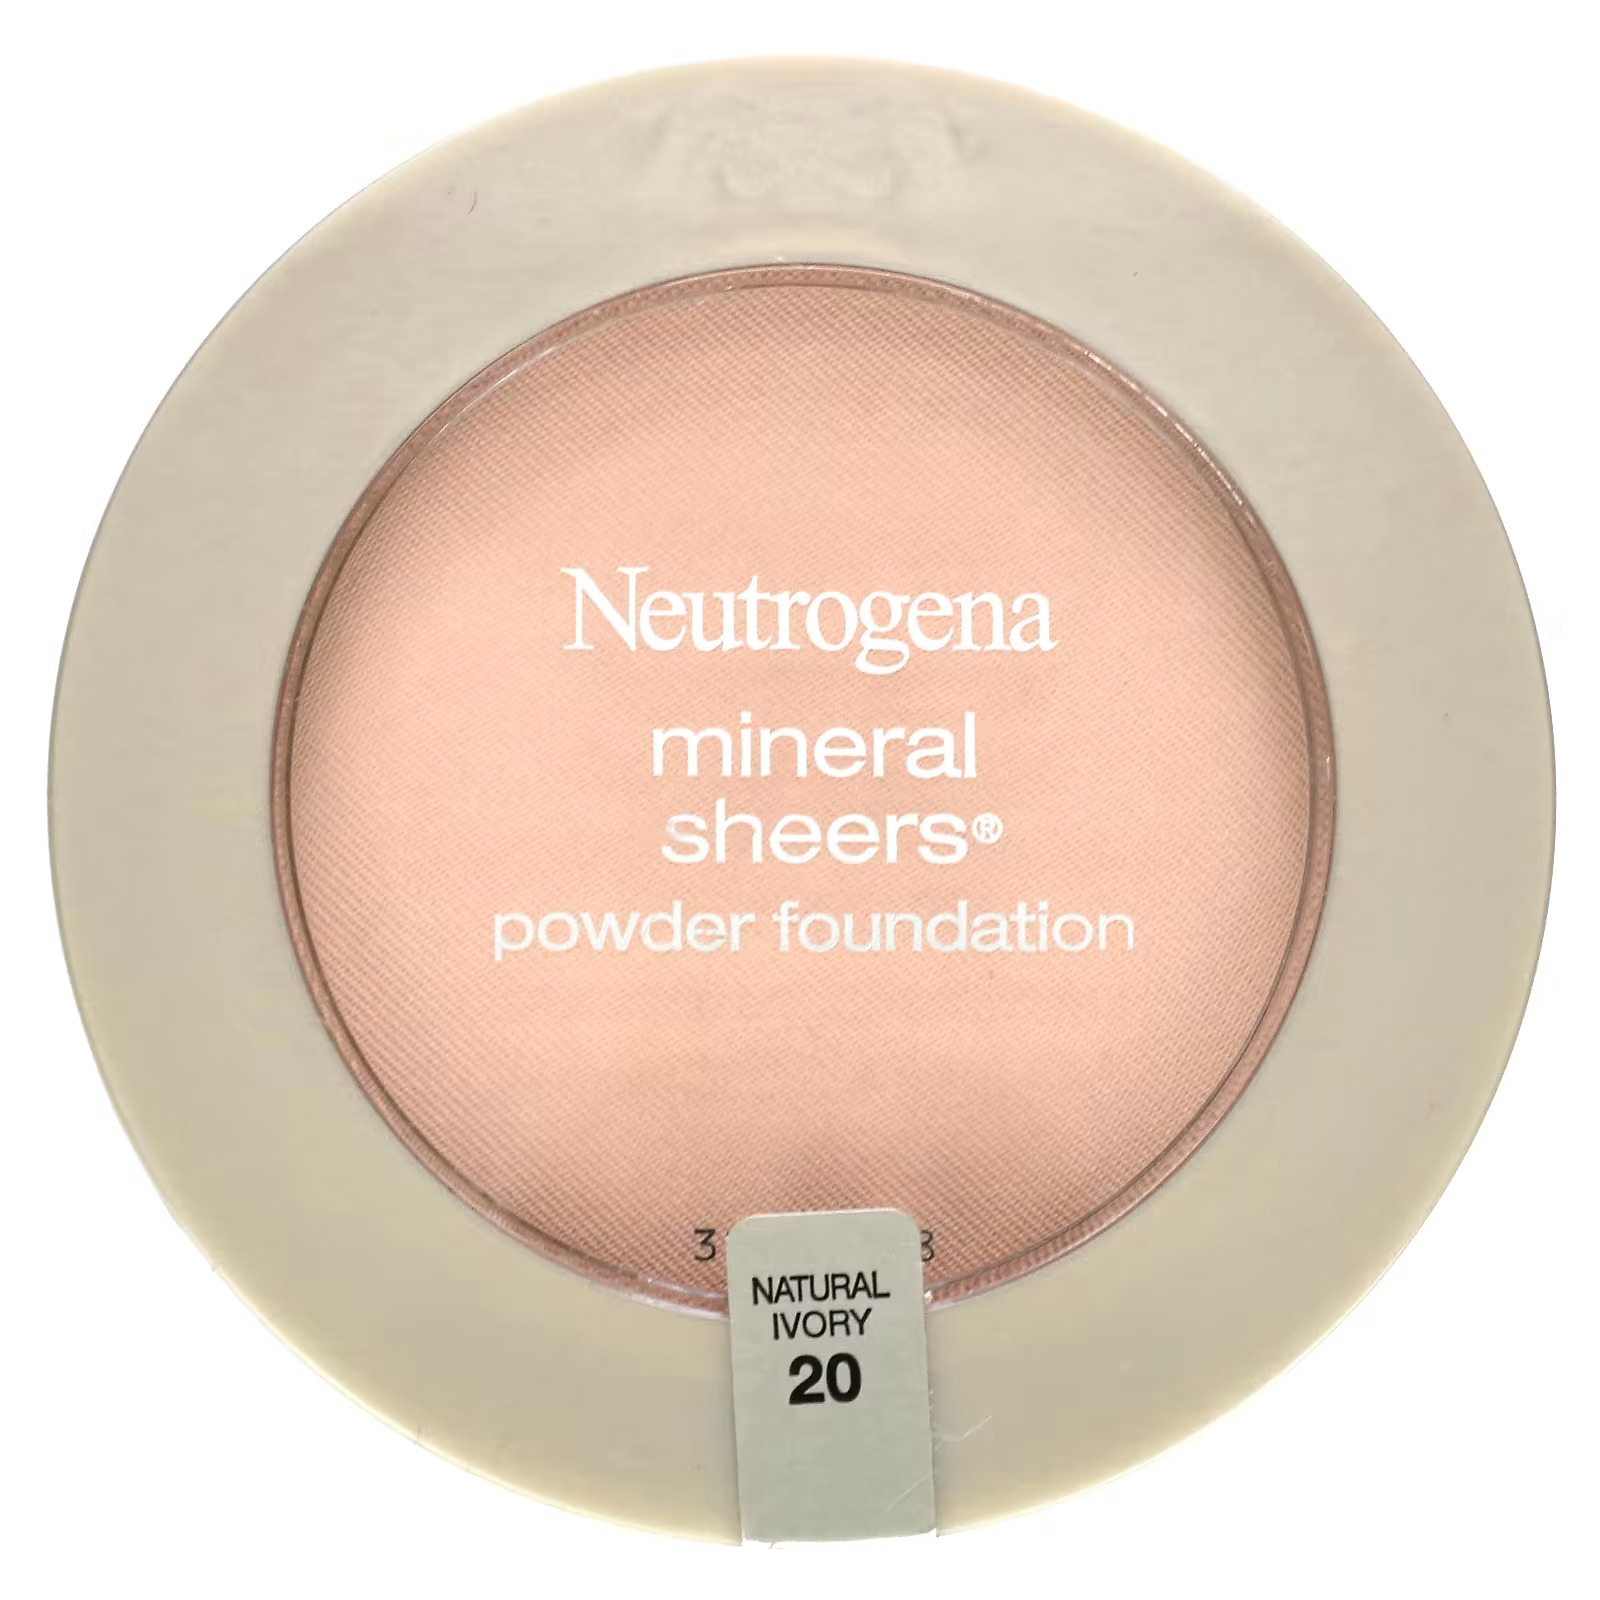 Neutrogena Mineral Sheers Powder Foundation Natural Ivory 20 0,34 унции (9,6 г) neutrogena mineral sheers тональная пудра мягкий бежевый 50 9 6 г 0 34 унции